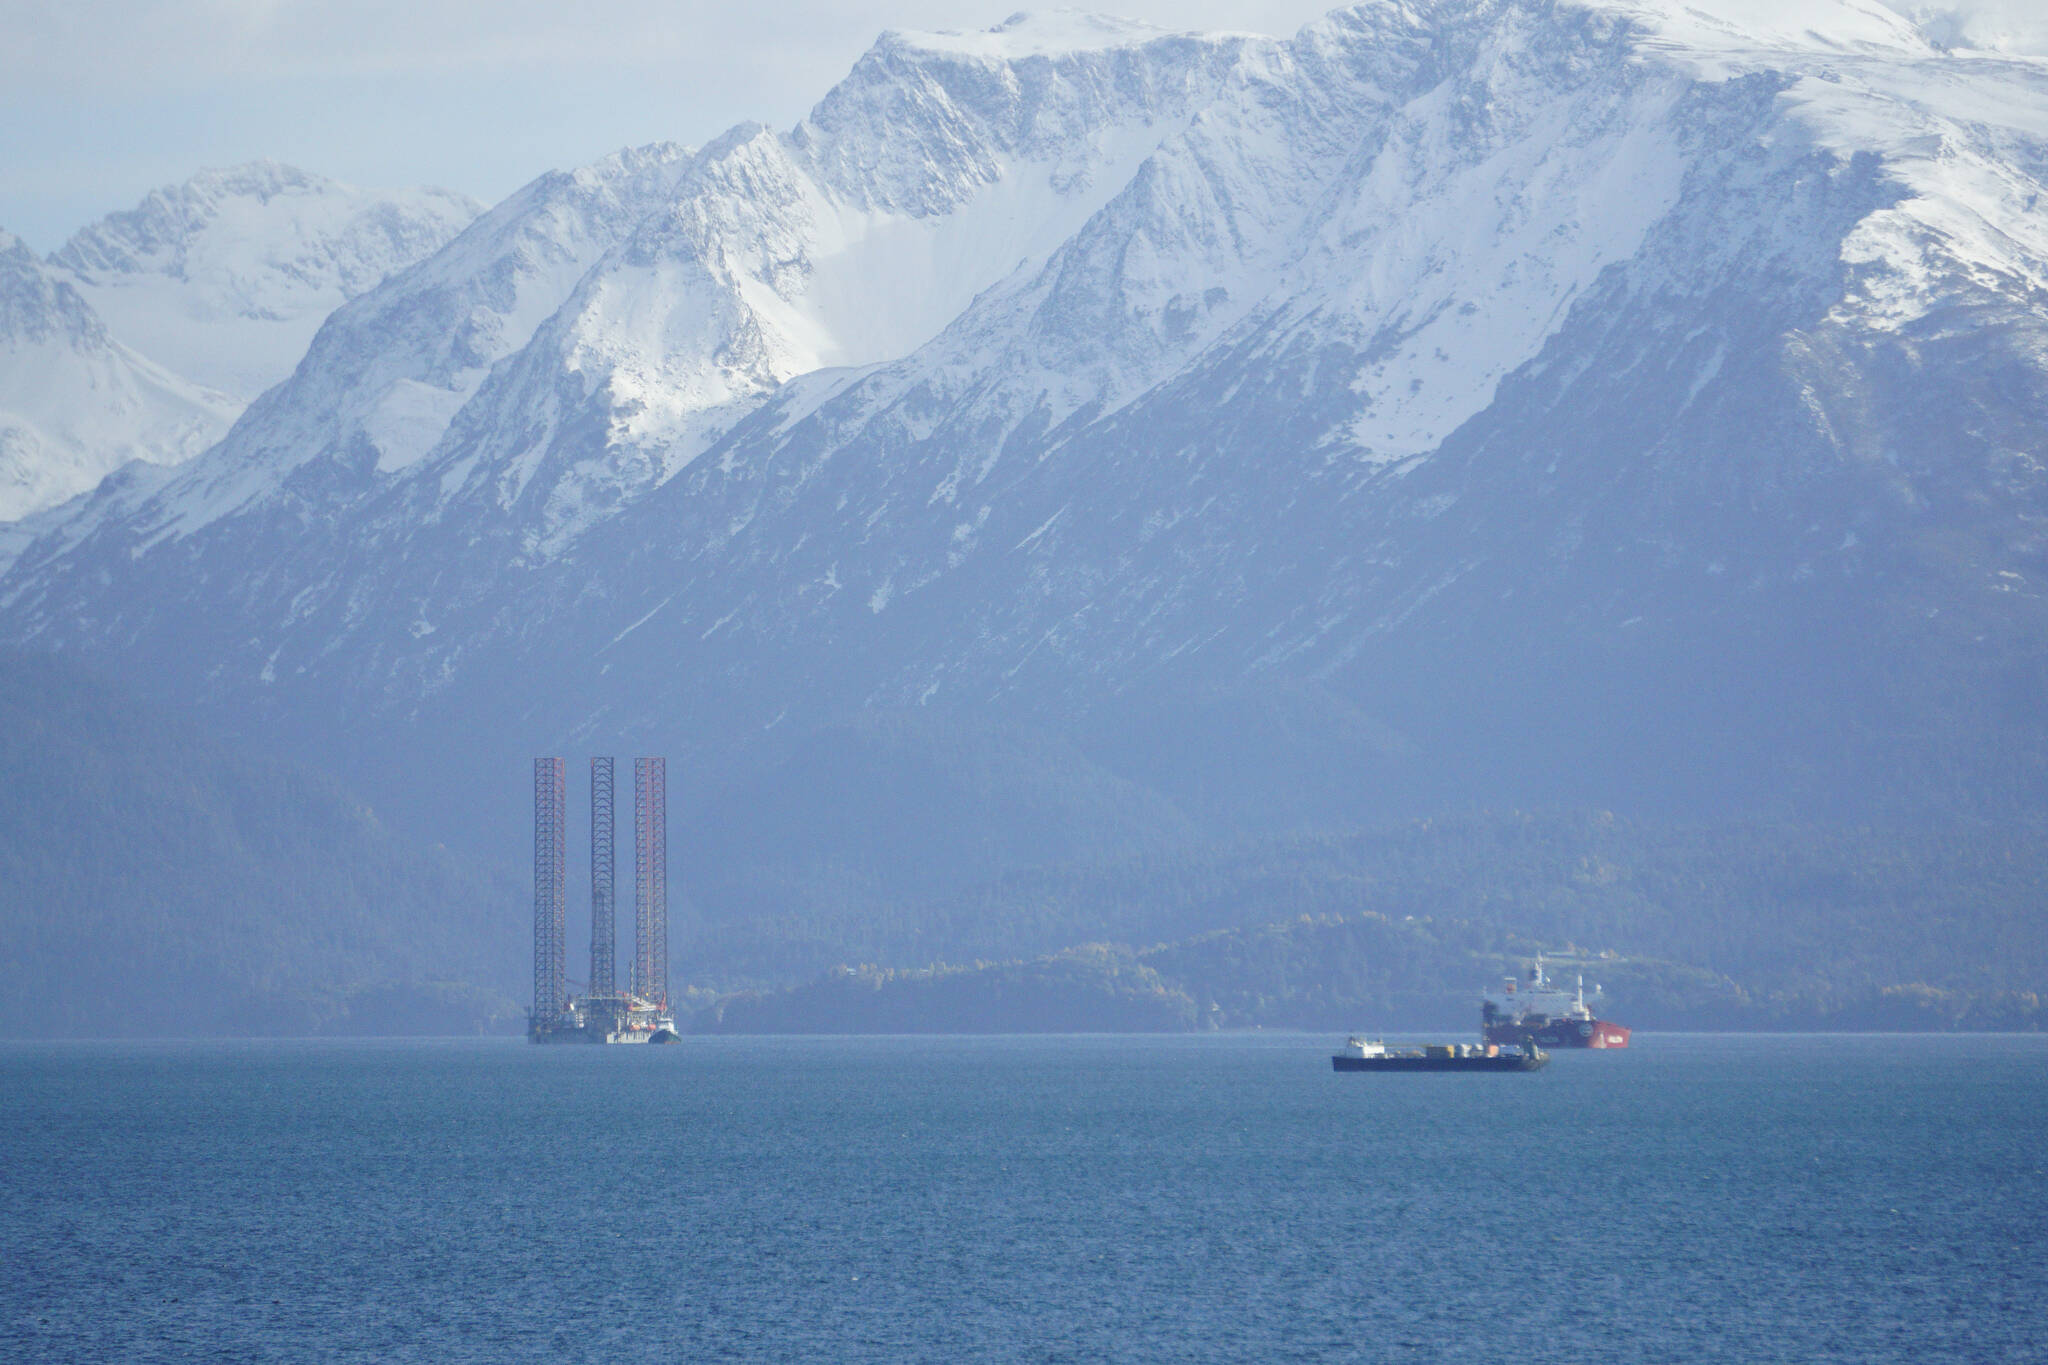 The jack-up rig Randolph Yost, left, awaits loading on the heavy-lift vessel Falcon on Sunday, Oct. 3, 2021, in Kachemak Bay near Homer, Alaska. (Photo by Michael Armstrong/Homer News)